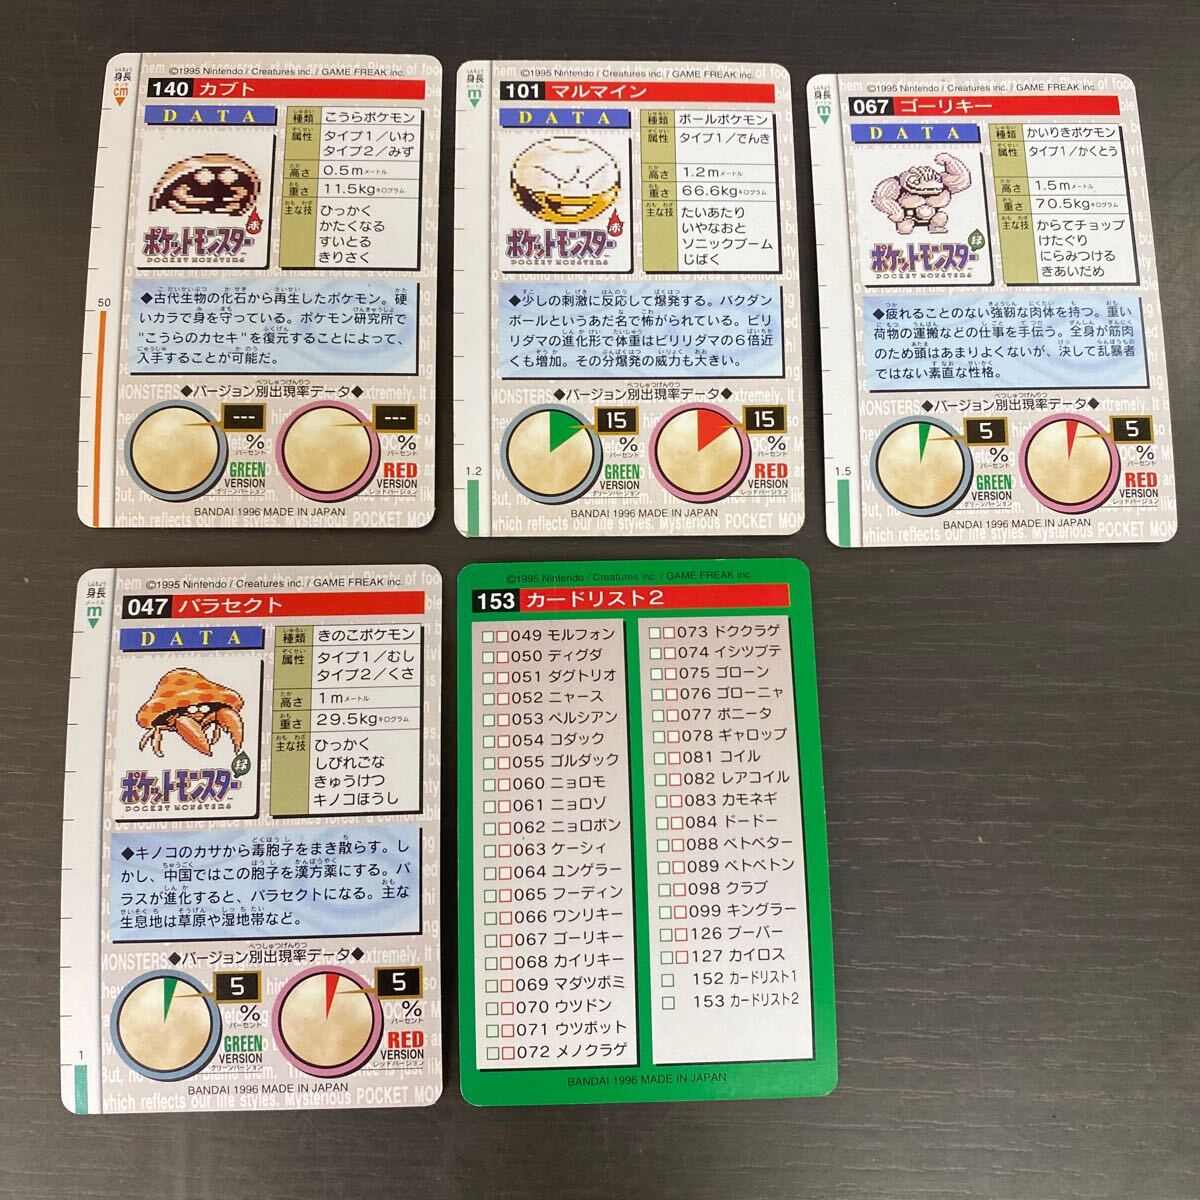 1996 at that time goods Nintendo Pocket Monster Carddas monster collection card trading card Pokemon BANDAI Bandai nintendo retro 